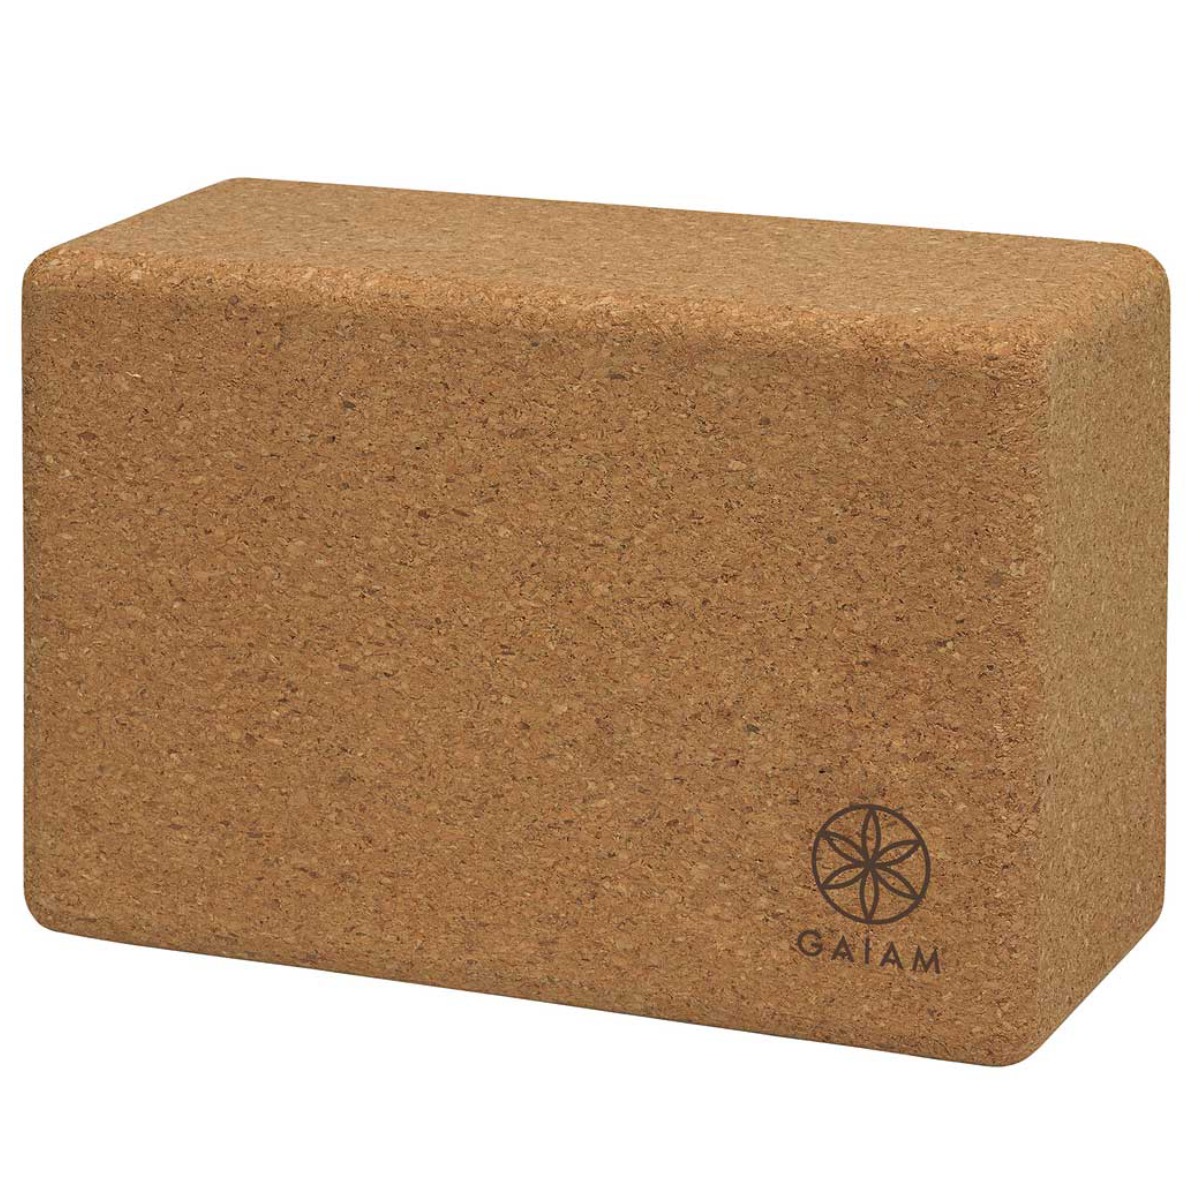 Gaiam Cork Yoga Block